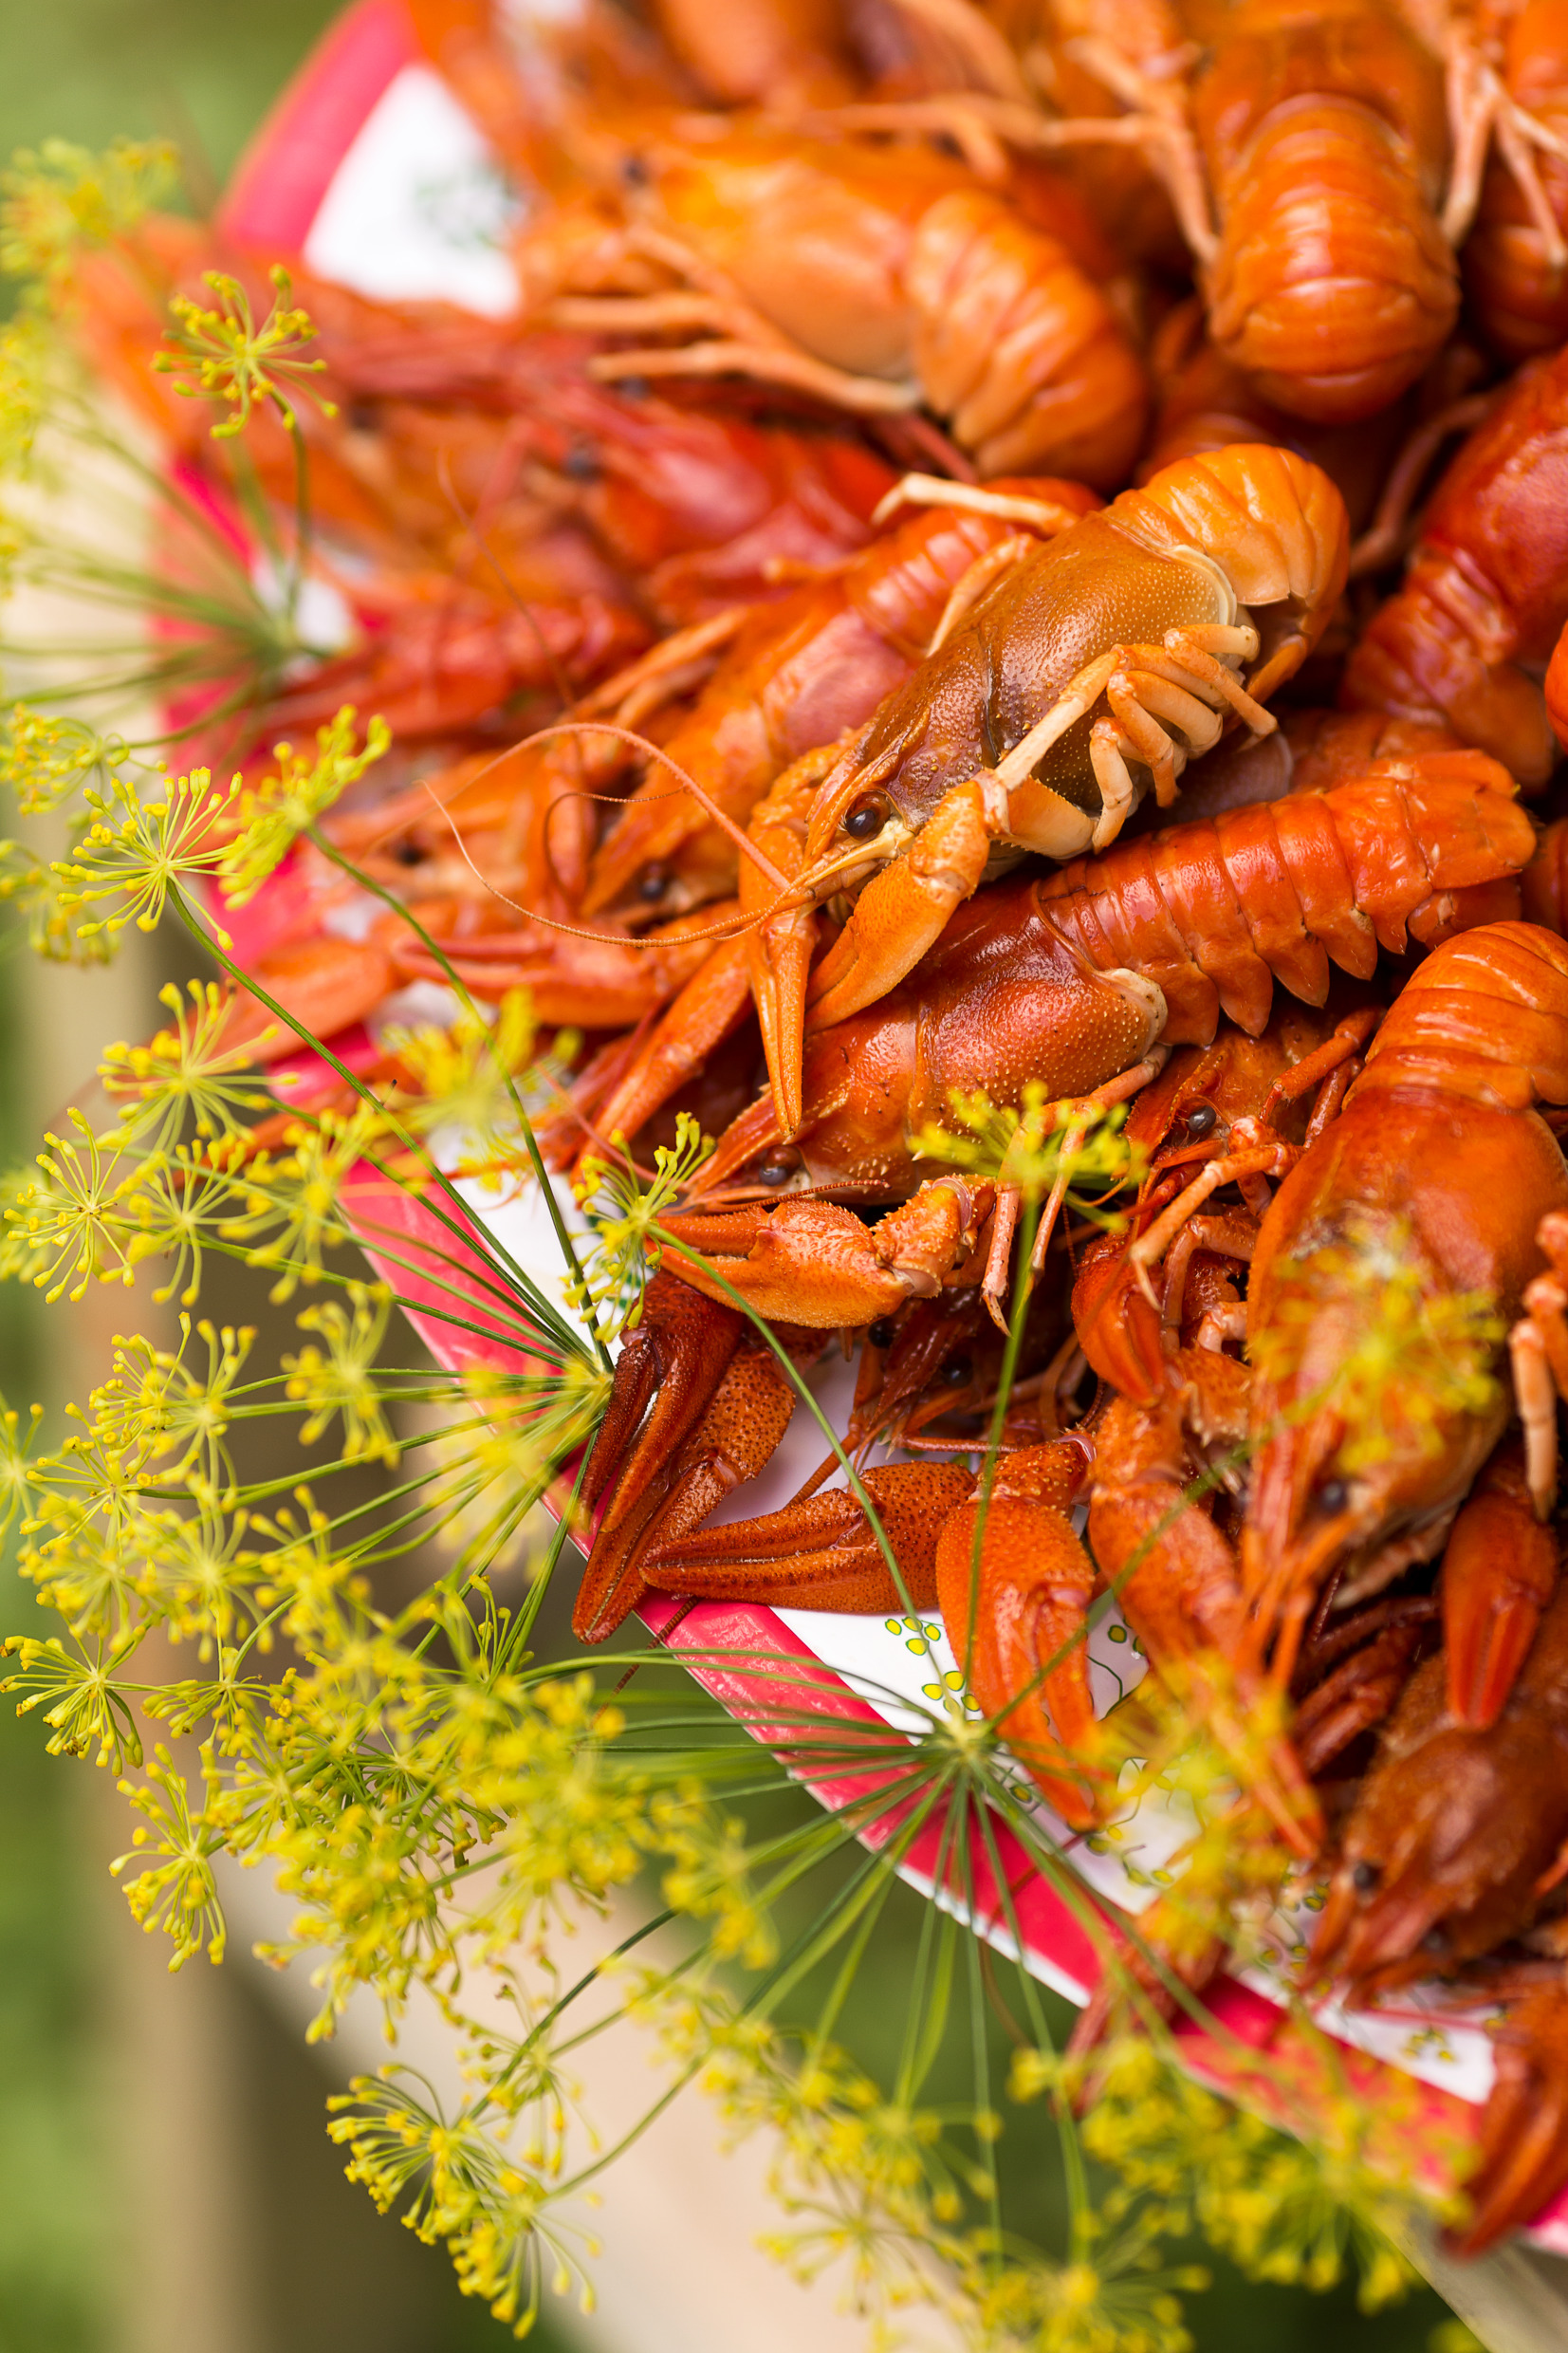 Swedish crayfish are cooked in brine, with plenty of dill. (Carolina Romare/imagebank.sweden.se)